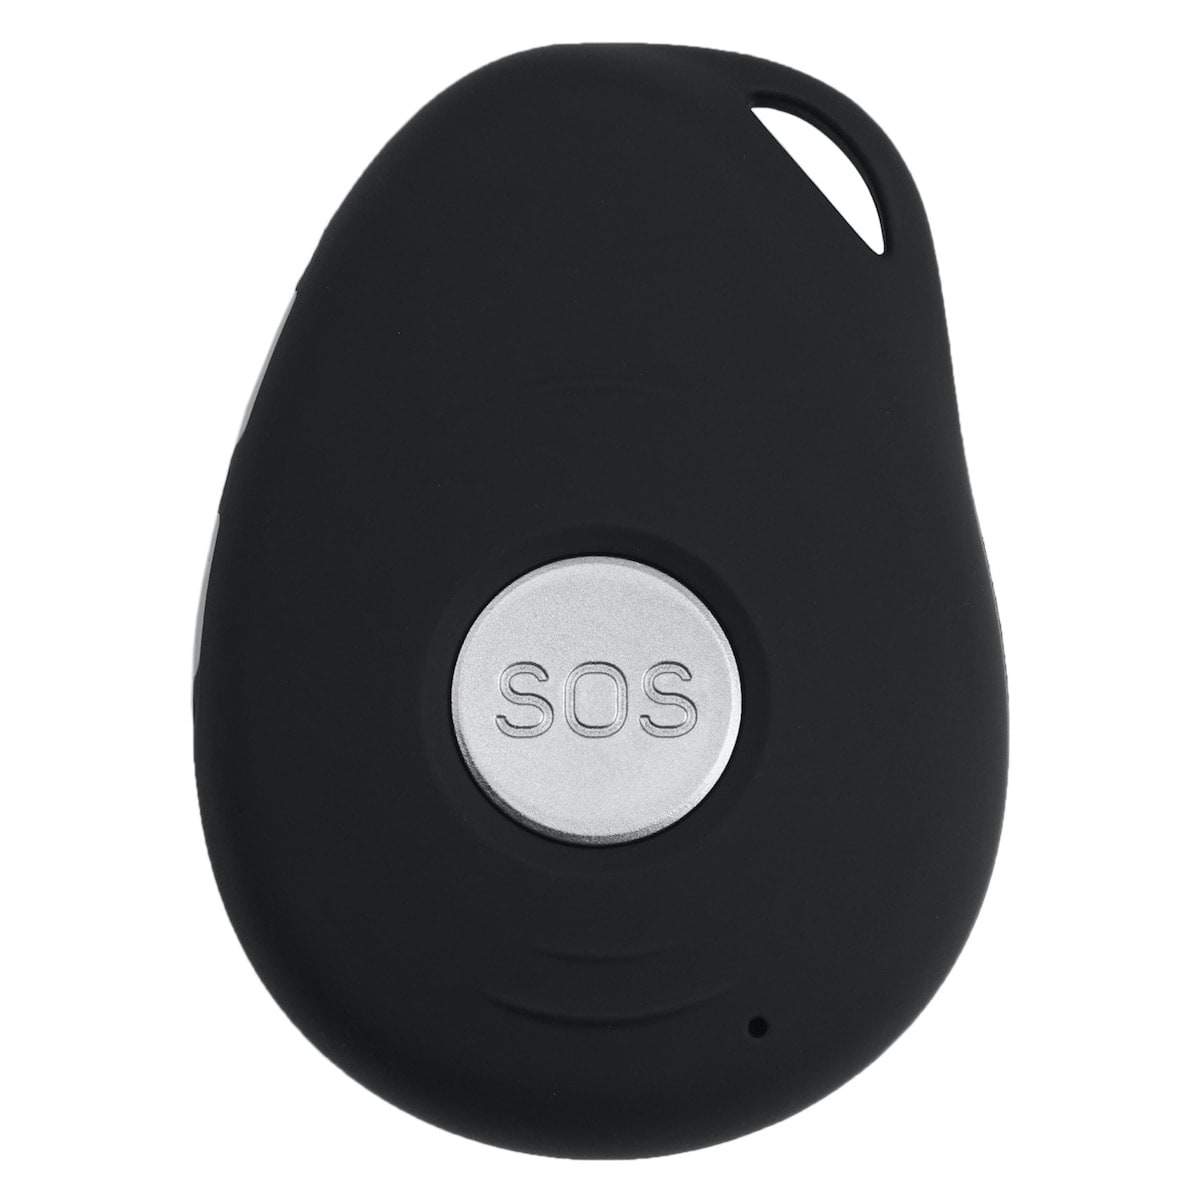 LifeWatcher SOS Button Pro